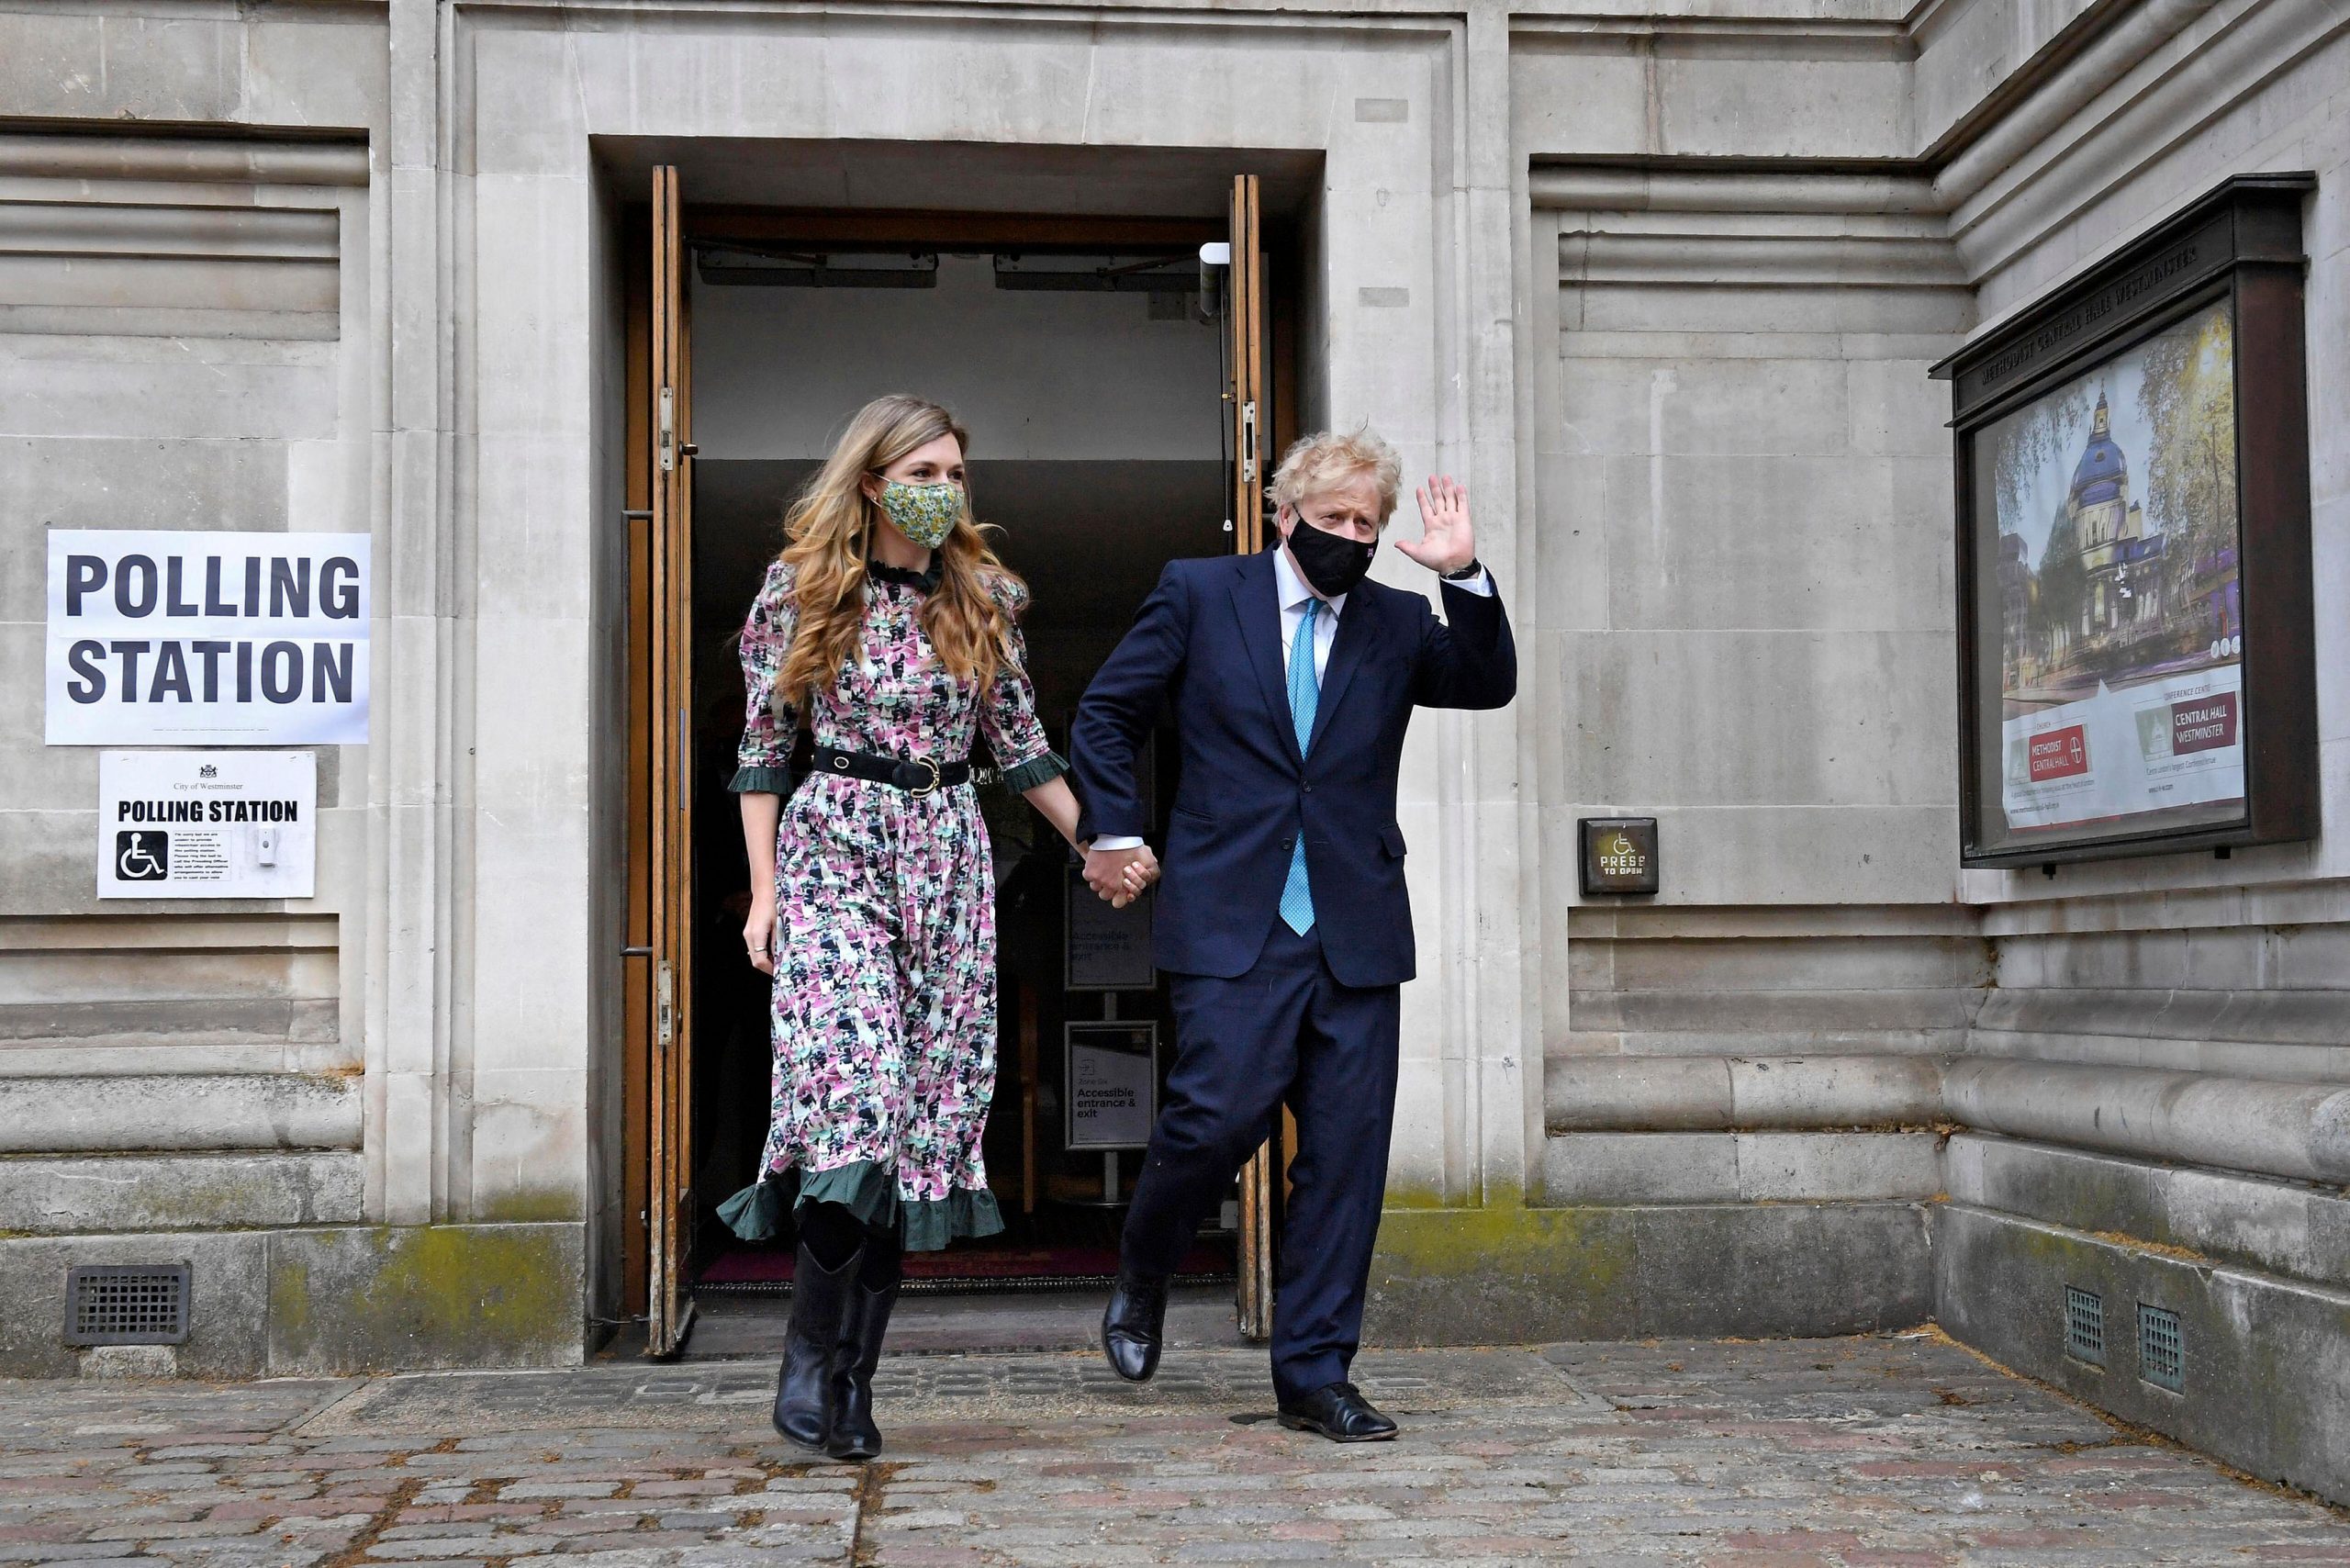 Boris Johnson marries fiance Carrie Symonds in secret ceremony: Reports